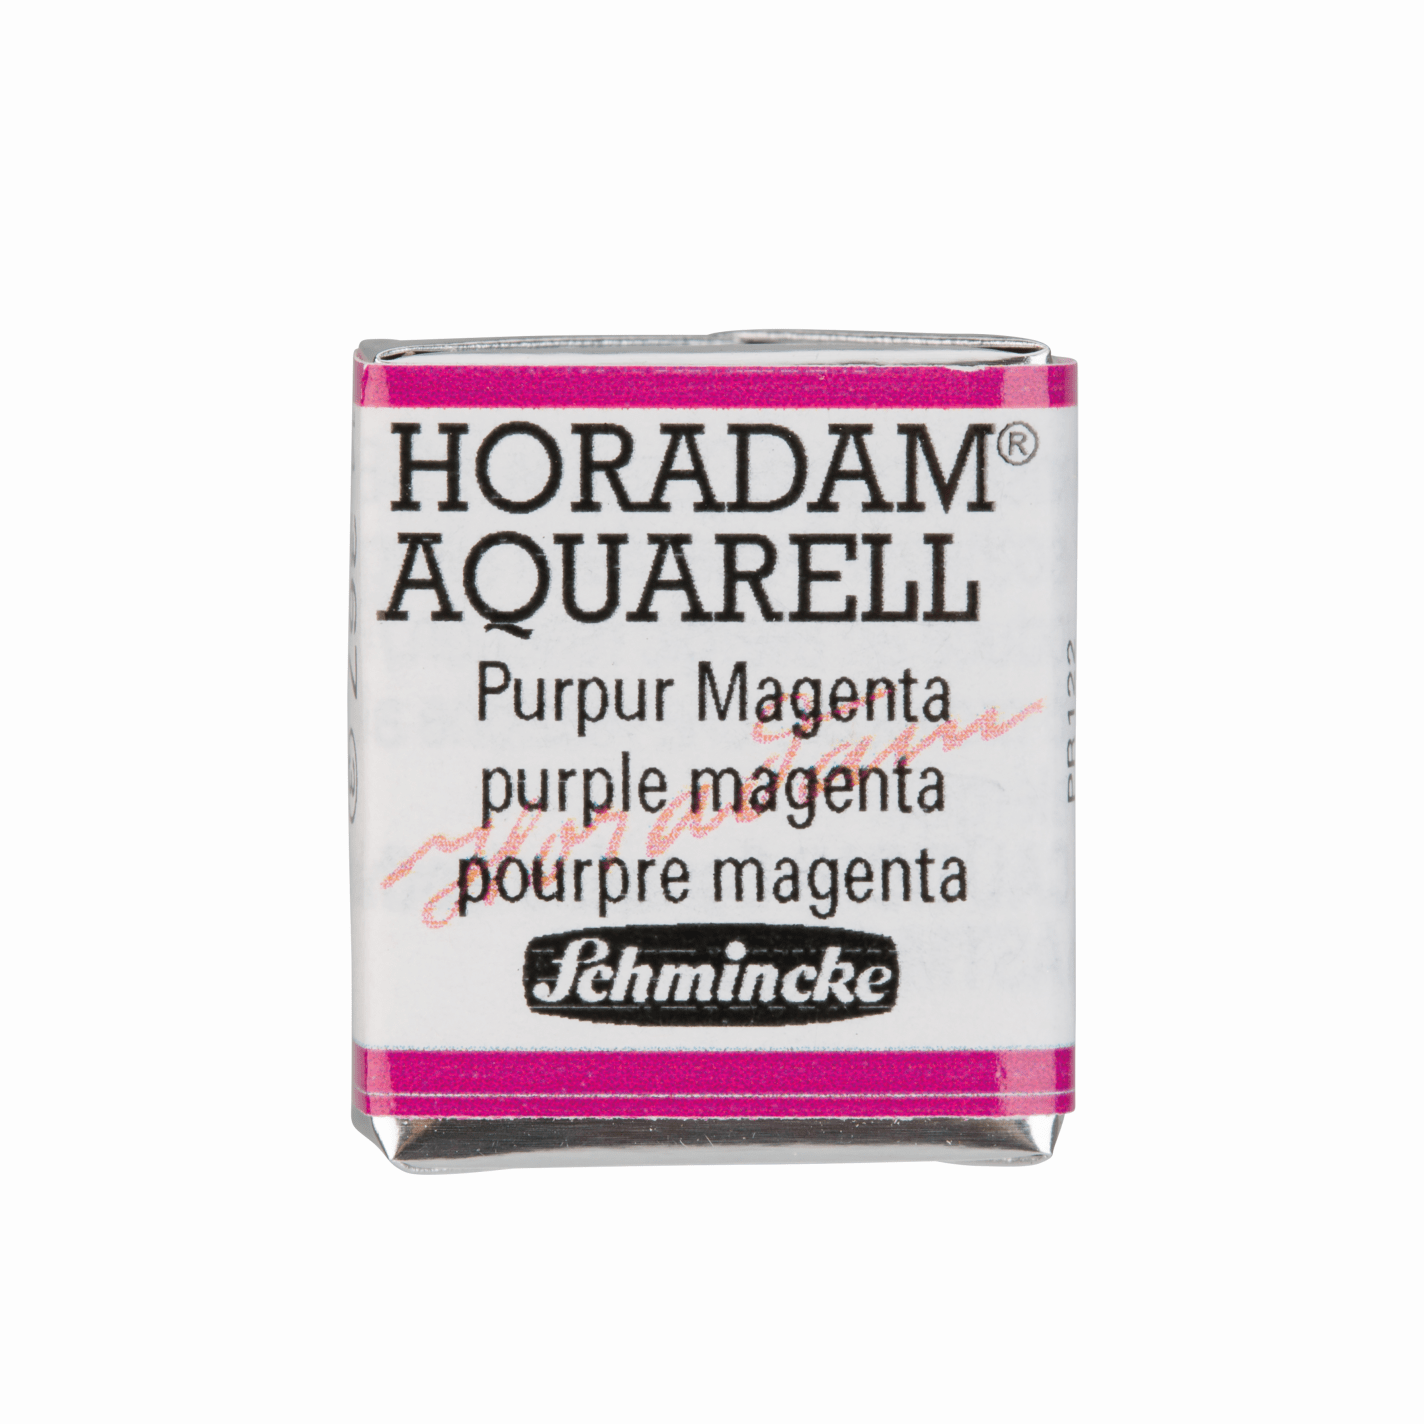 Schmincke Horadam Aquarell pans 1/2 pan Purple Magenta